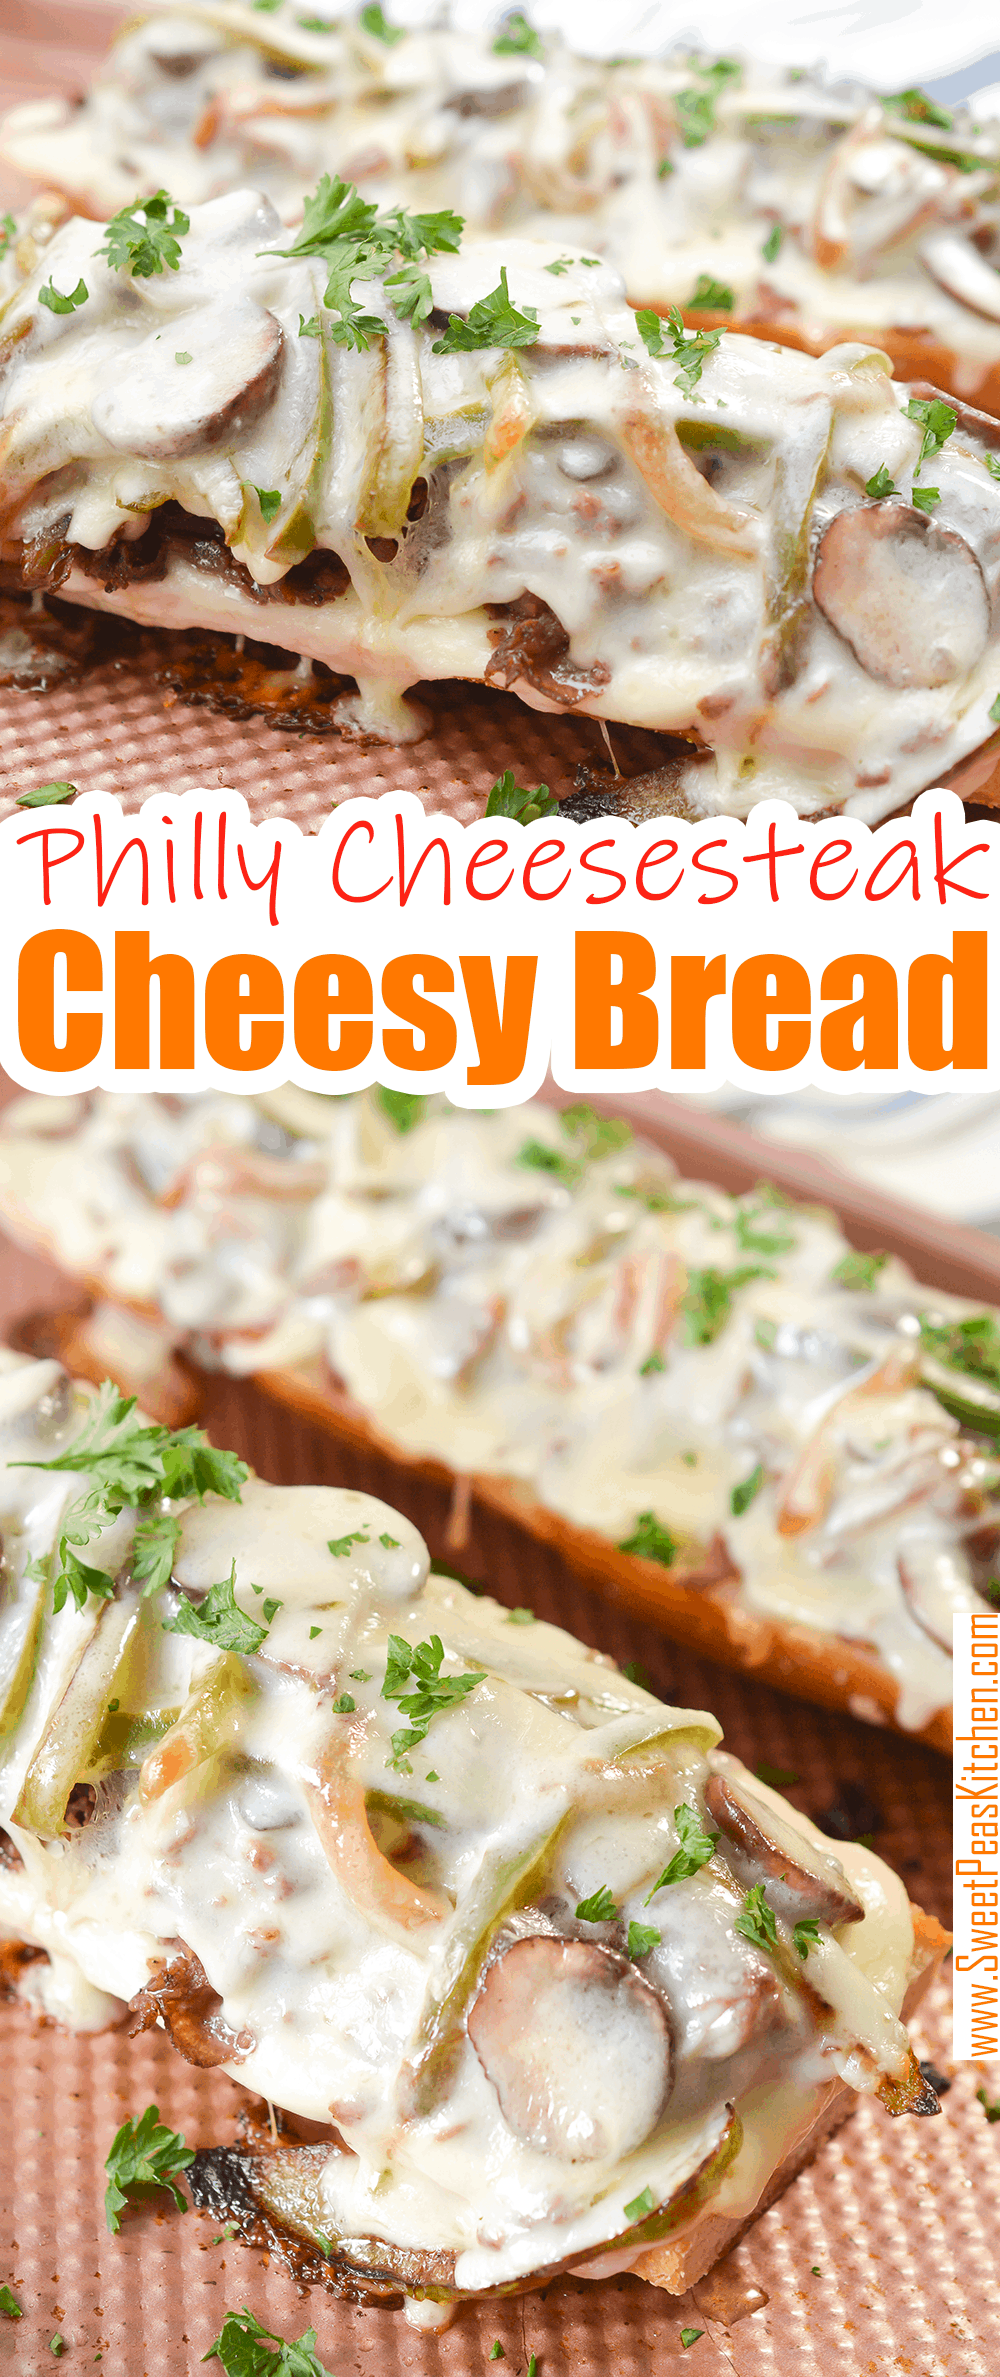 Philly Cheesesteak Cheesy Bread